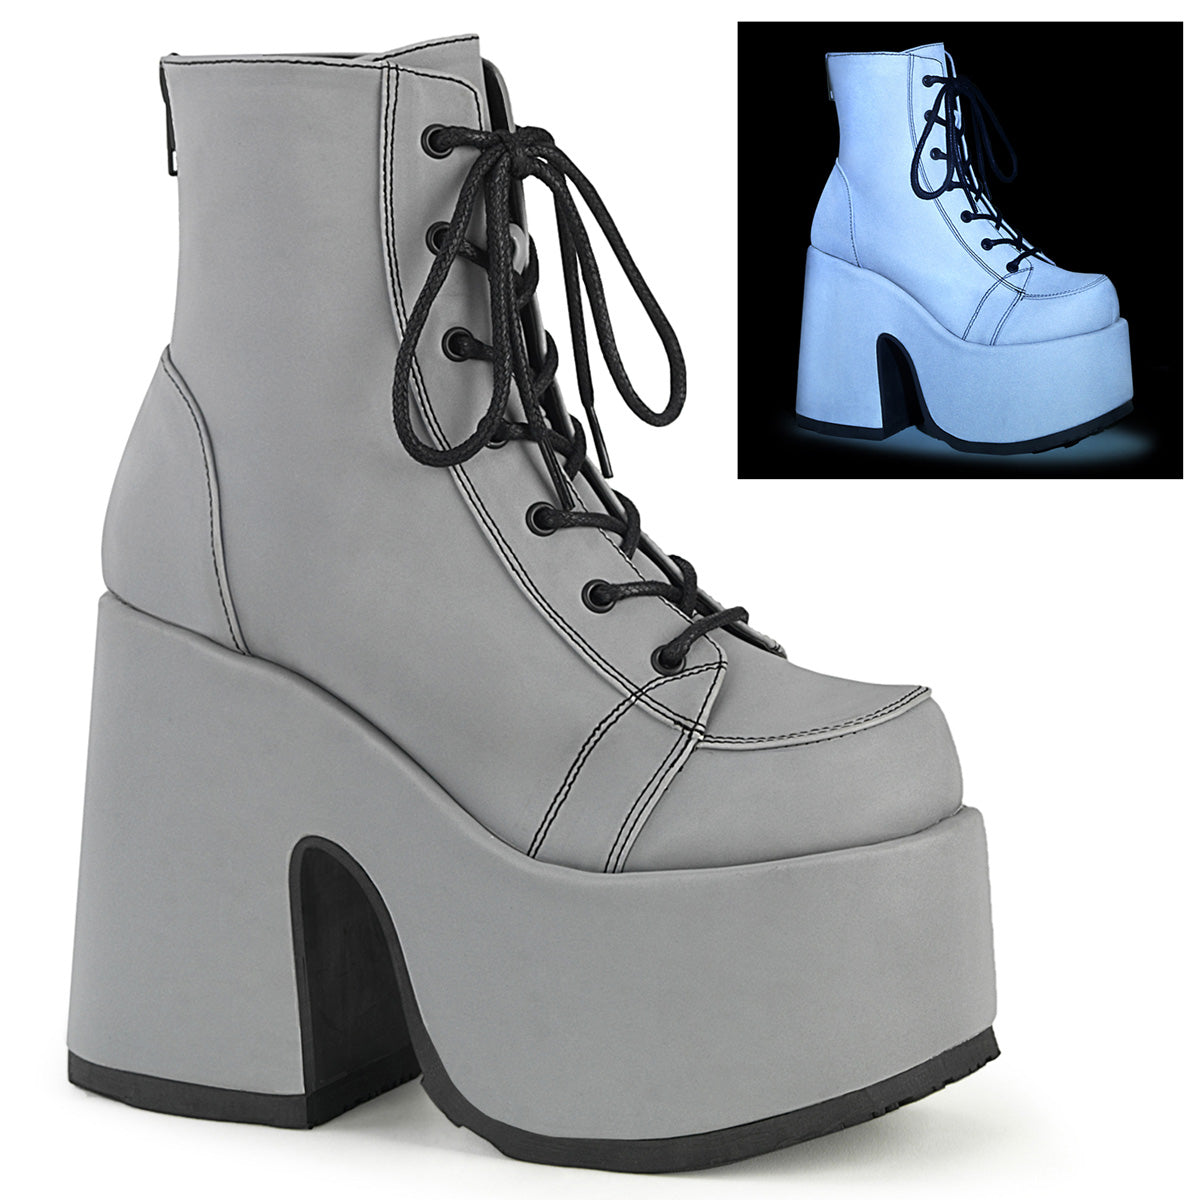 CAMEL-203 Grey Reflective Vegan Leather Ankle Boot Demonia